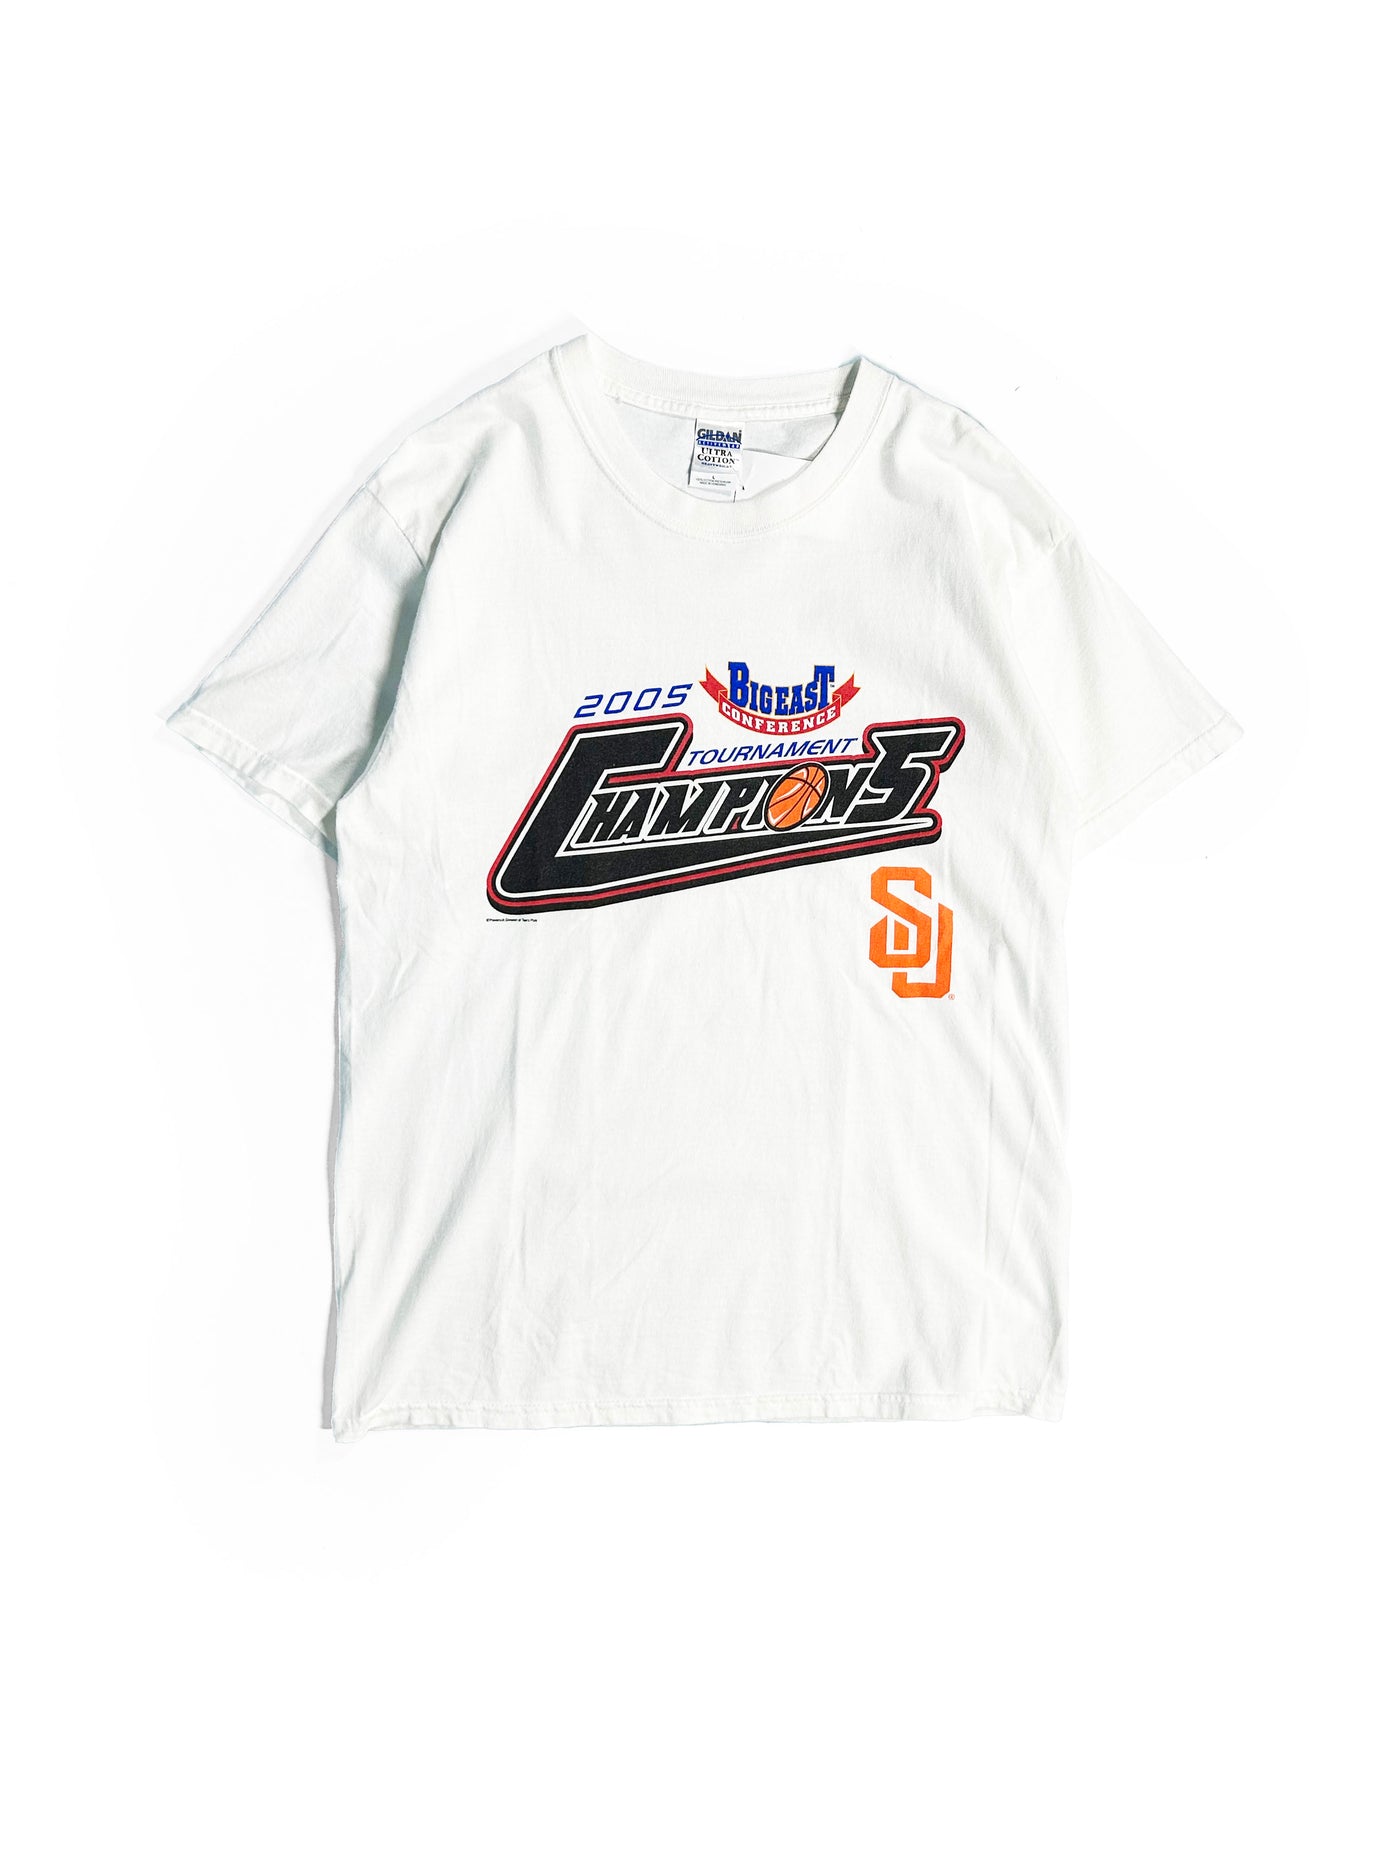 2005 Syracuse Big East Champs T-Shirt